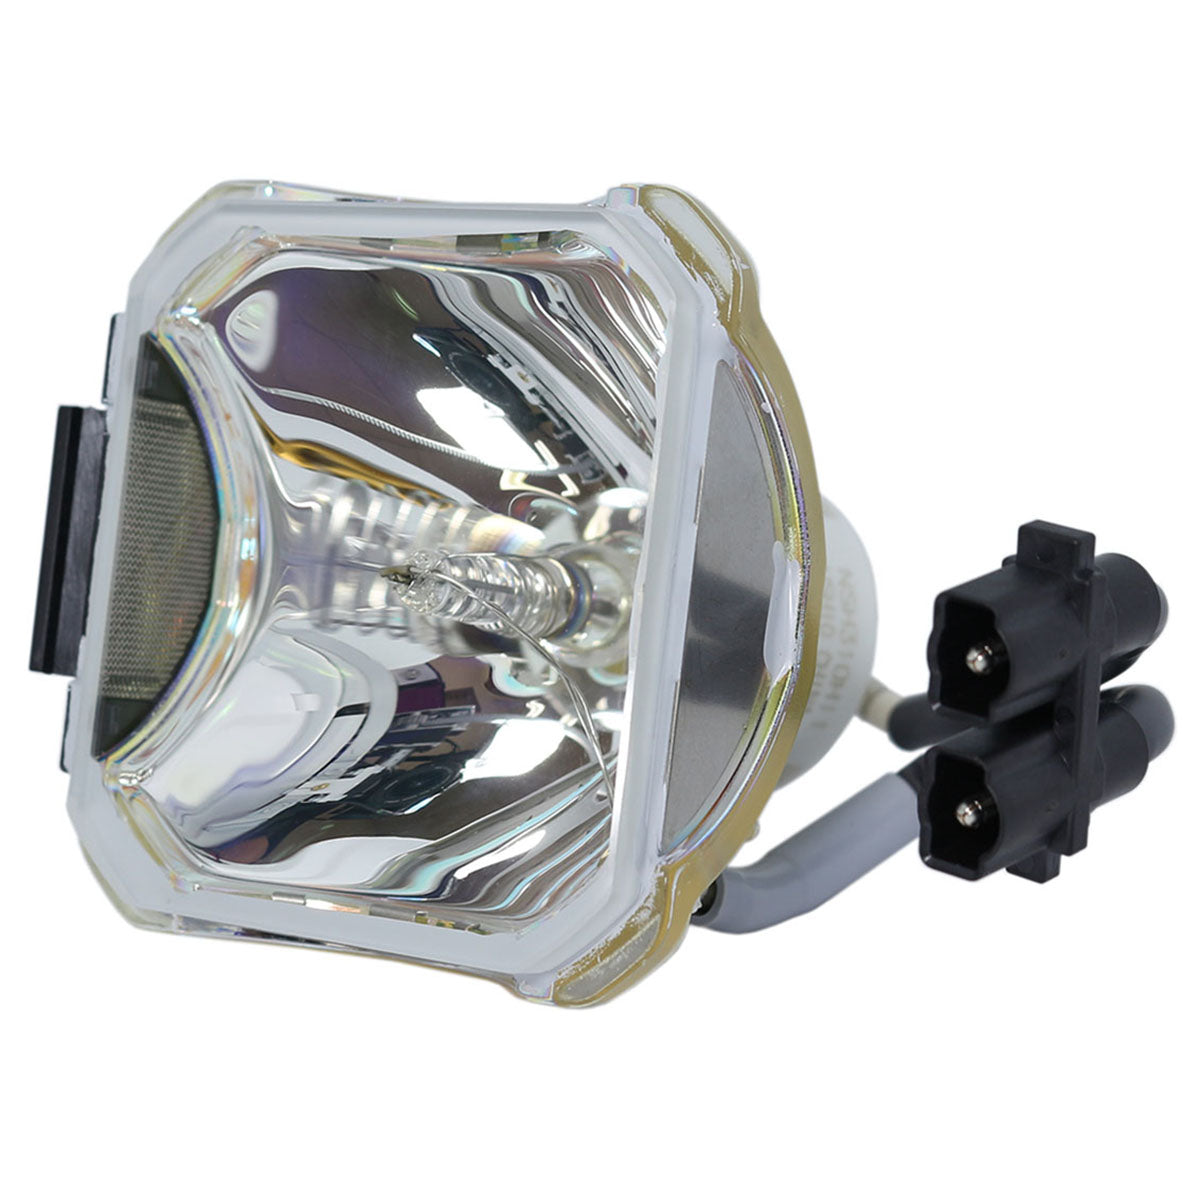 Dukane 456-8942 Ushio Projector Bare Lamp